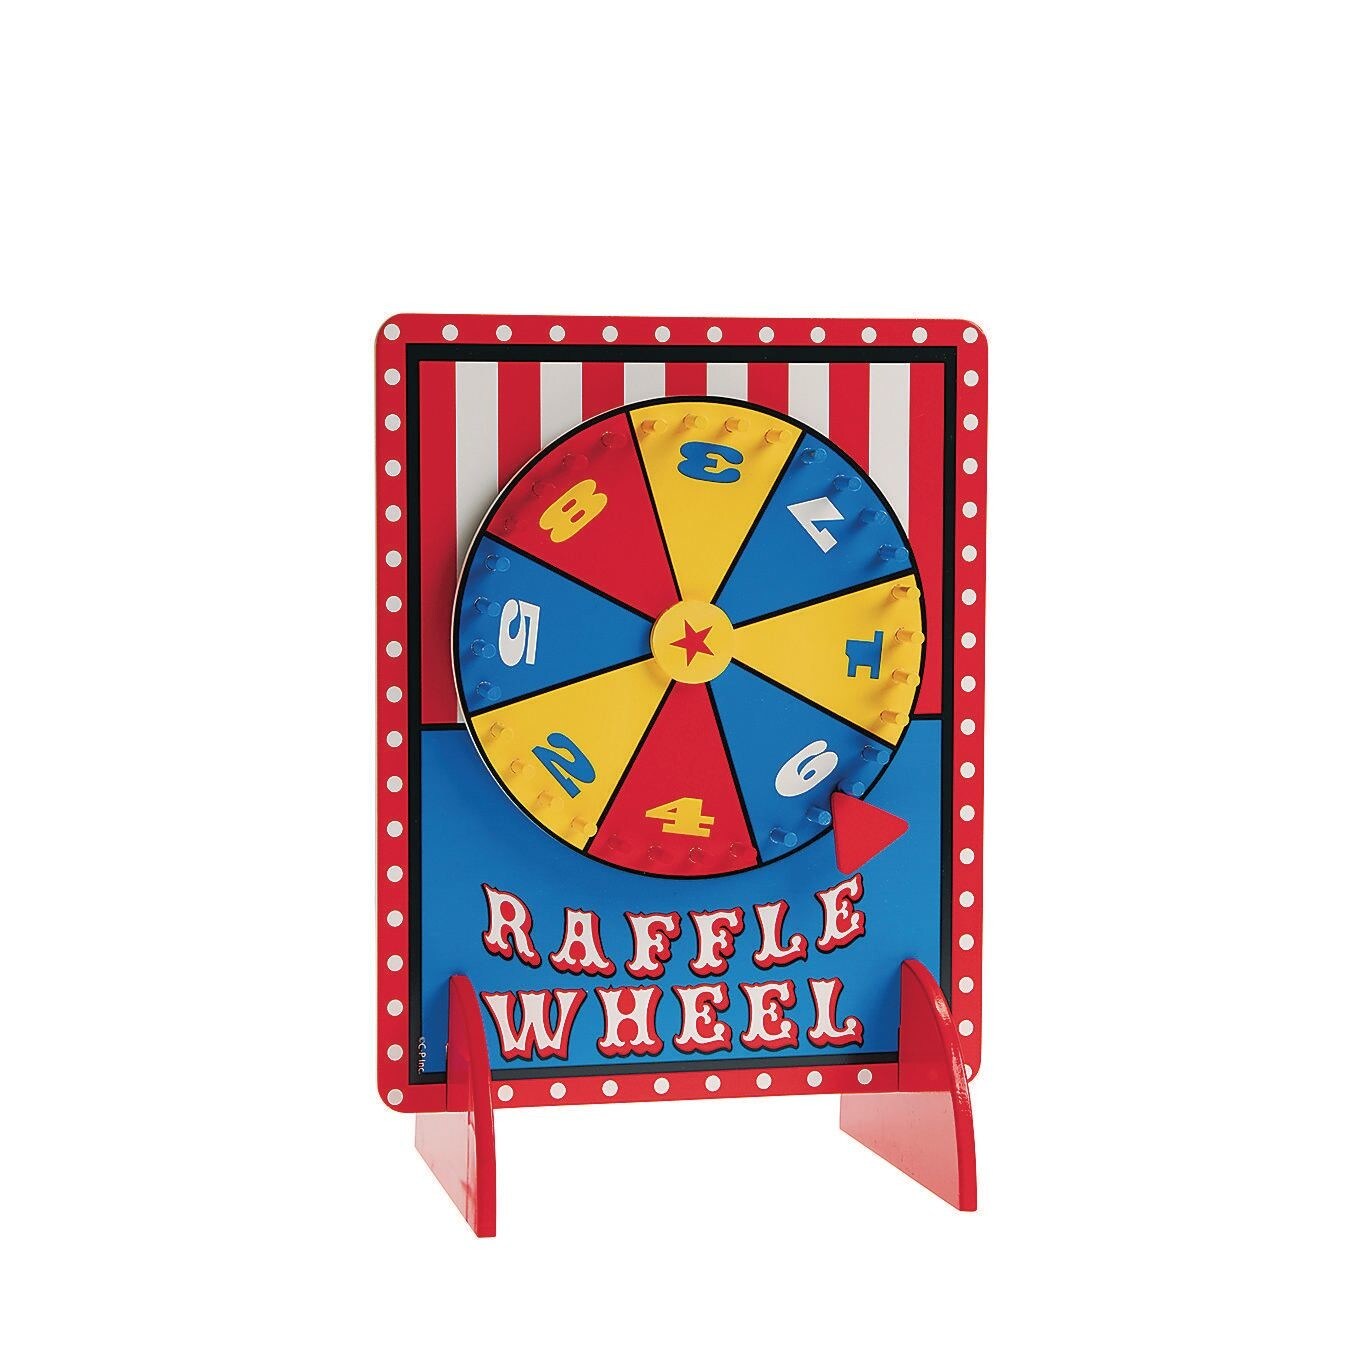 Spin 'n Win Prize Wheel Kit